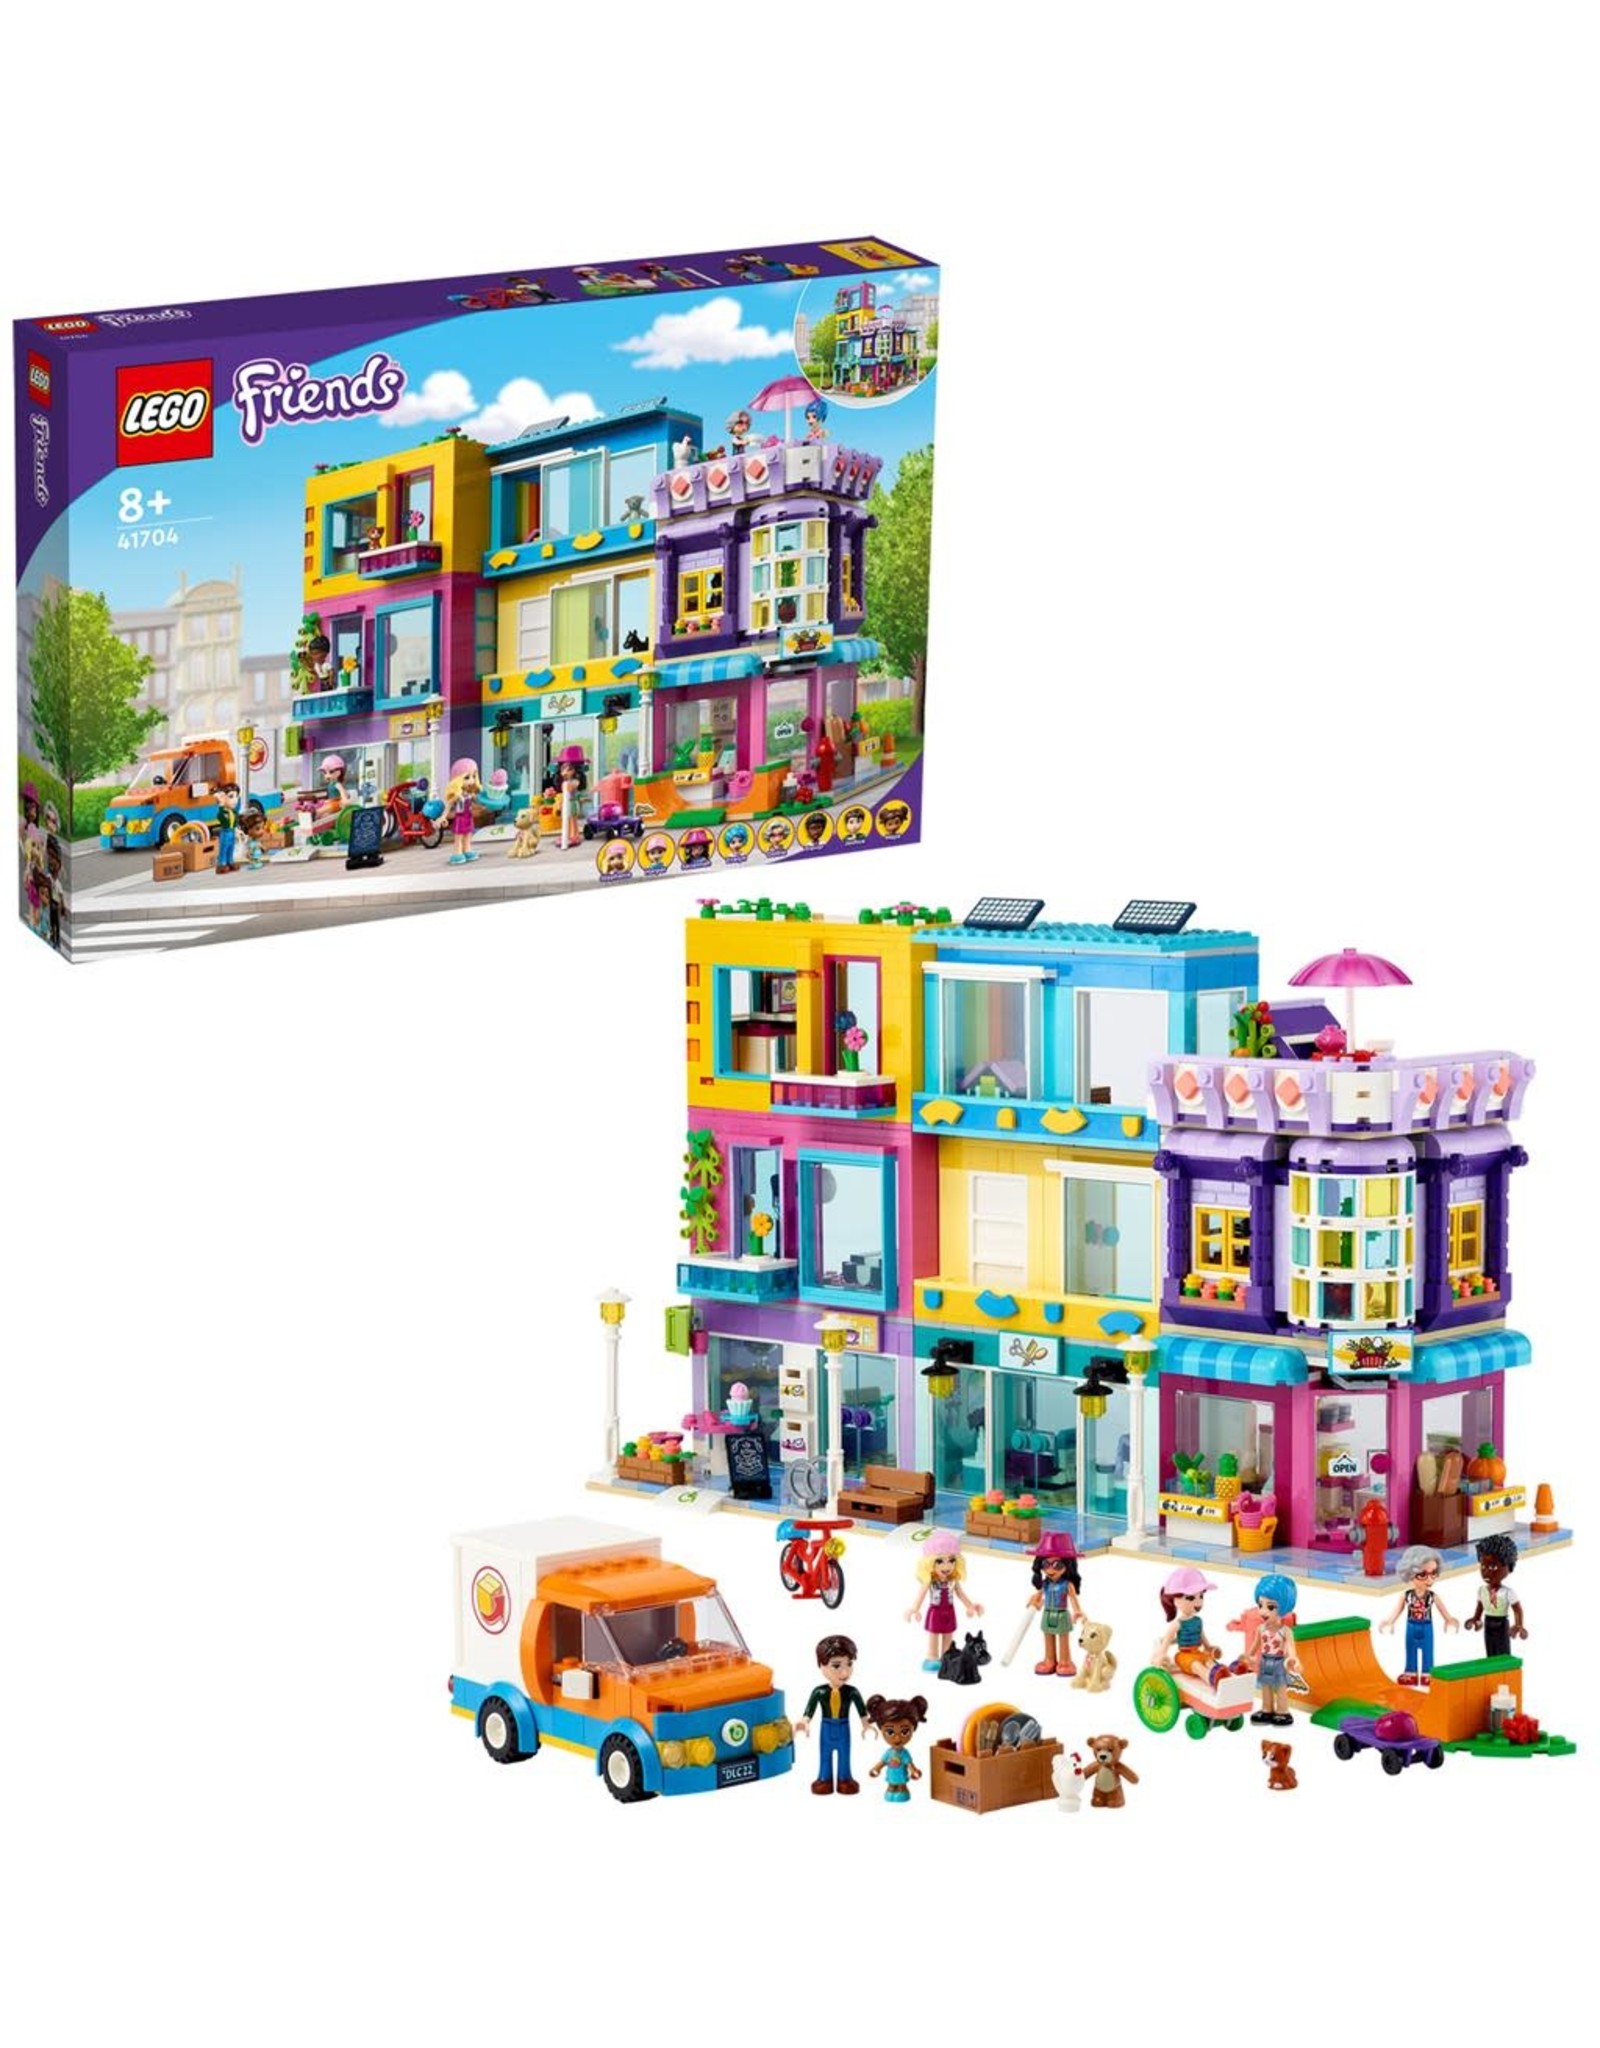 LEGO Lego Friends 41704 Hoofdstraatgebouw – Main Street Building